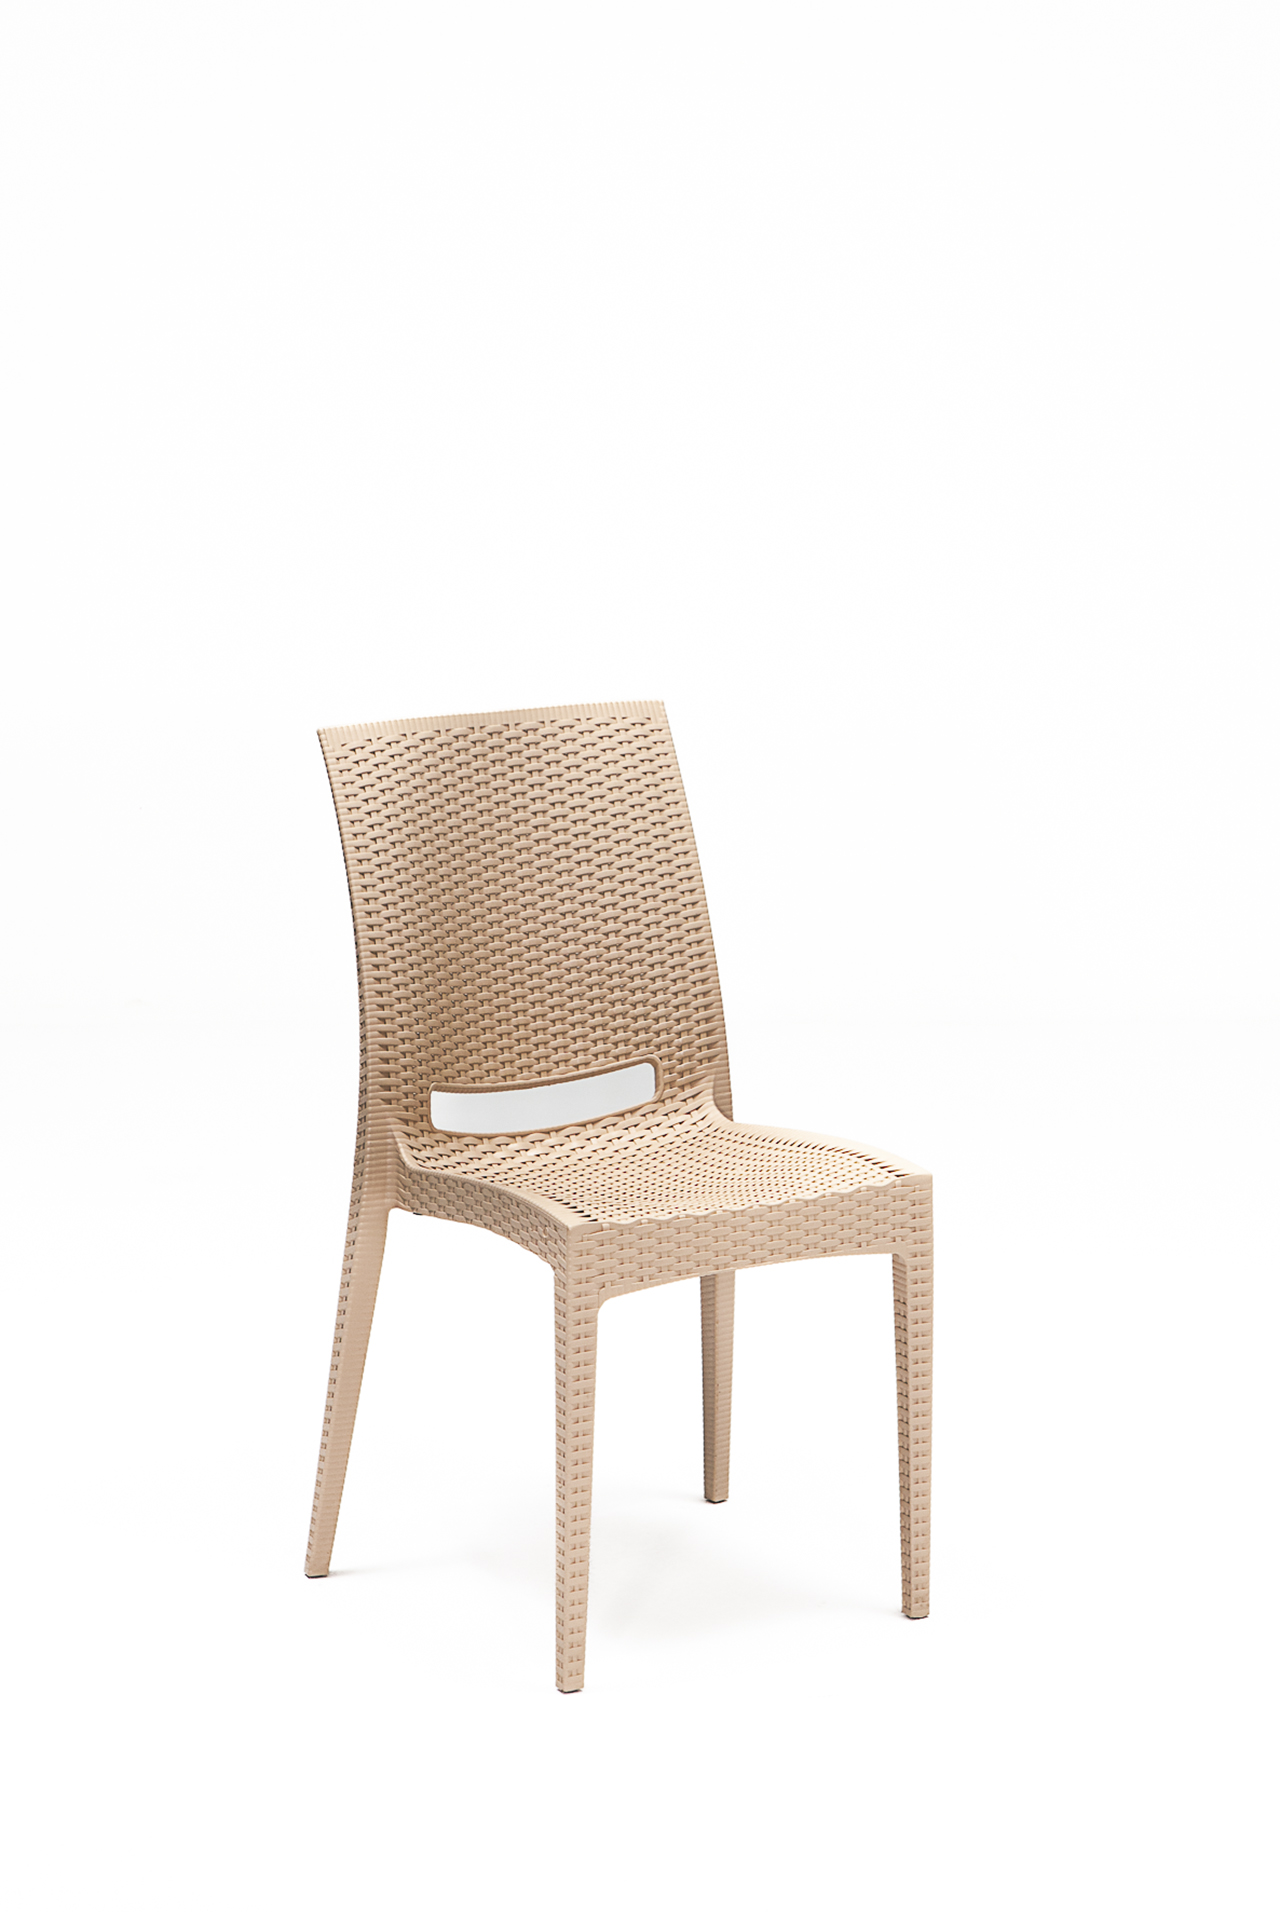 2 Pcs. Rattan Cappucino Chairs / Balcony-Garden-Terrace